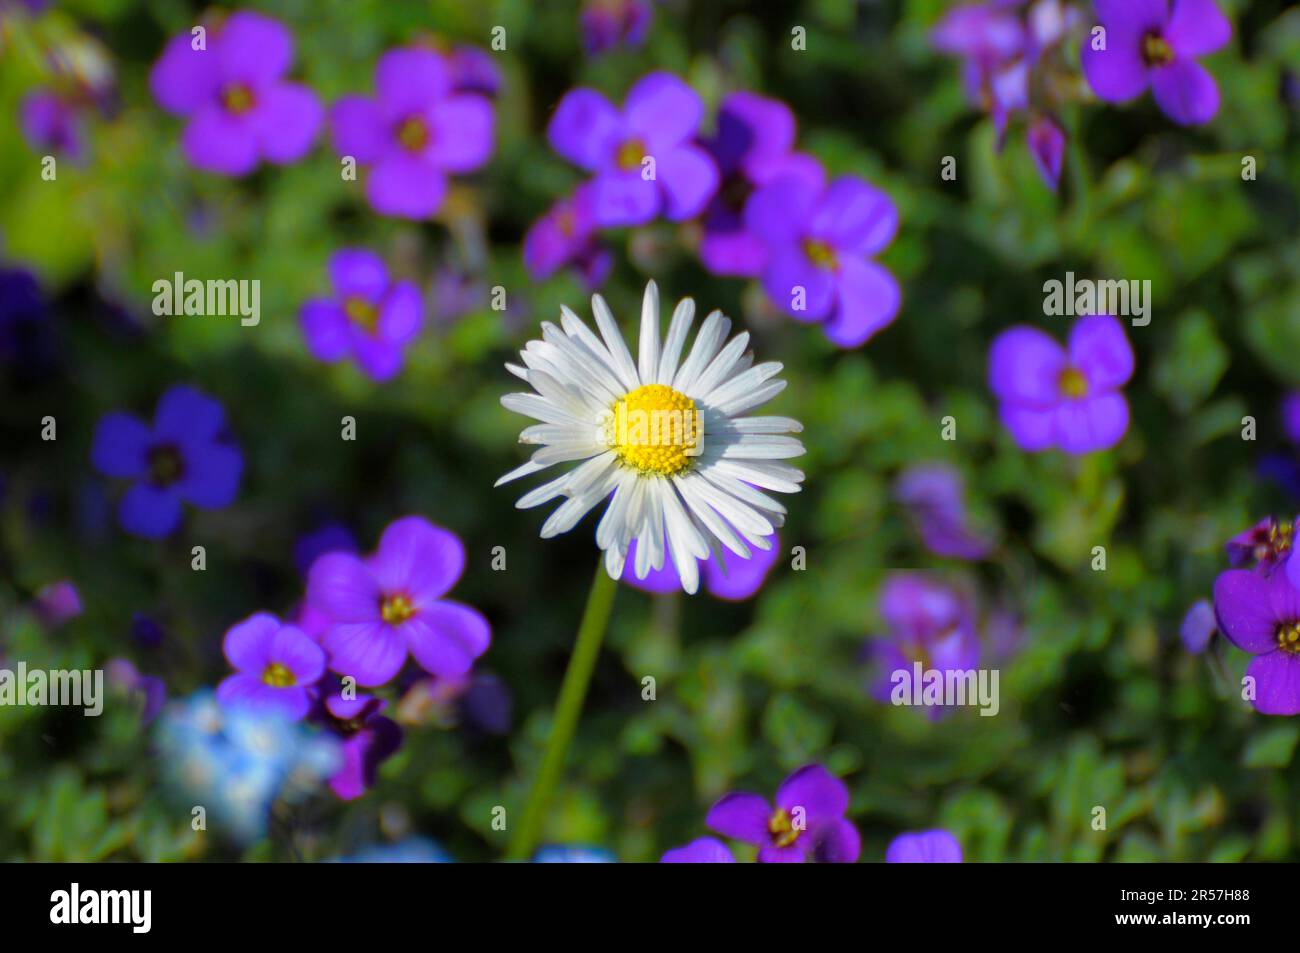 Common daisy (Bellis perennis) in Blue Cushion, Daisy, Perennial Daisy, Massive Daisy, Centaury, lilacbush (Aubrieta deltoidea) Stock Photo